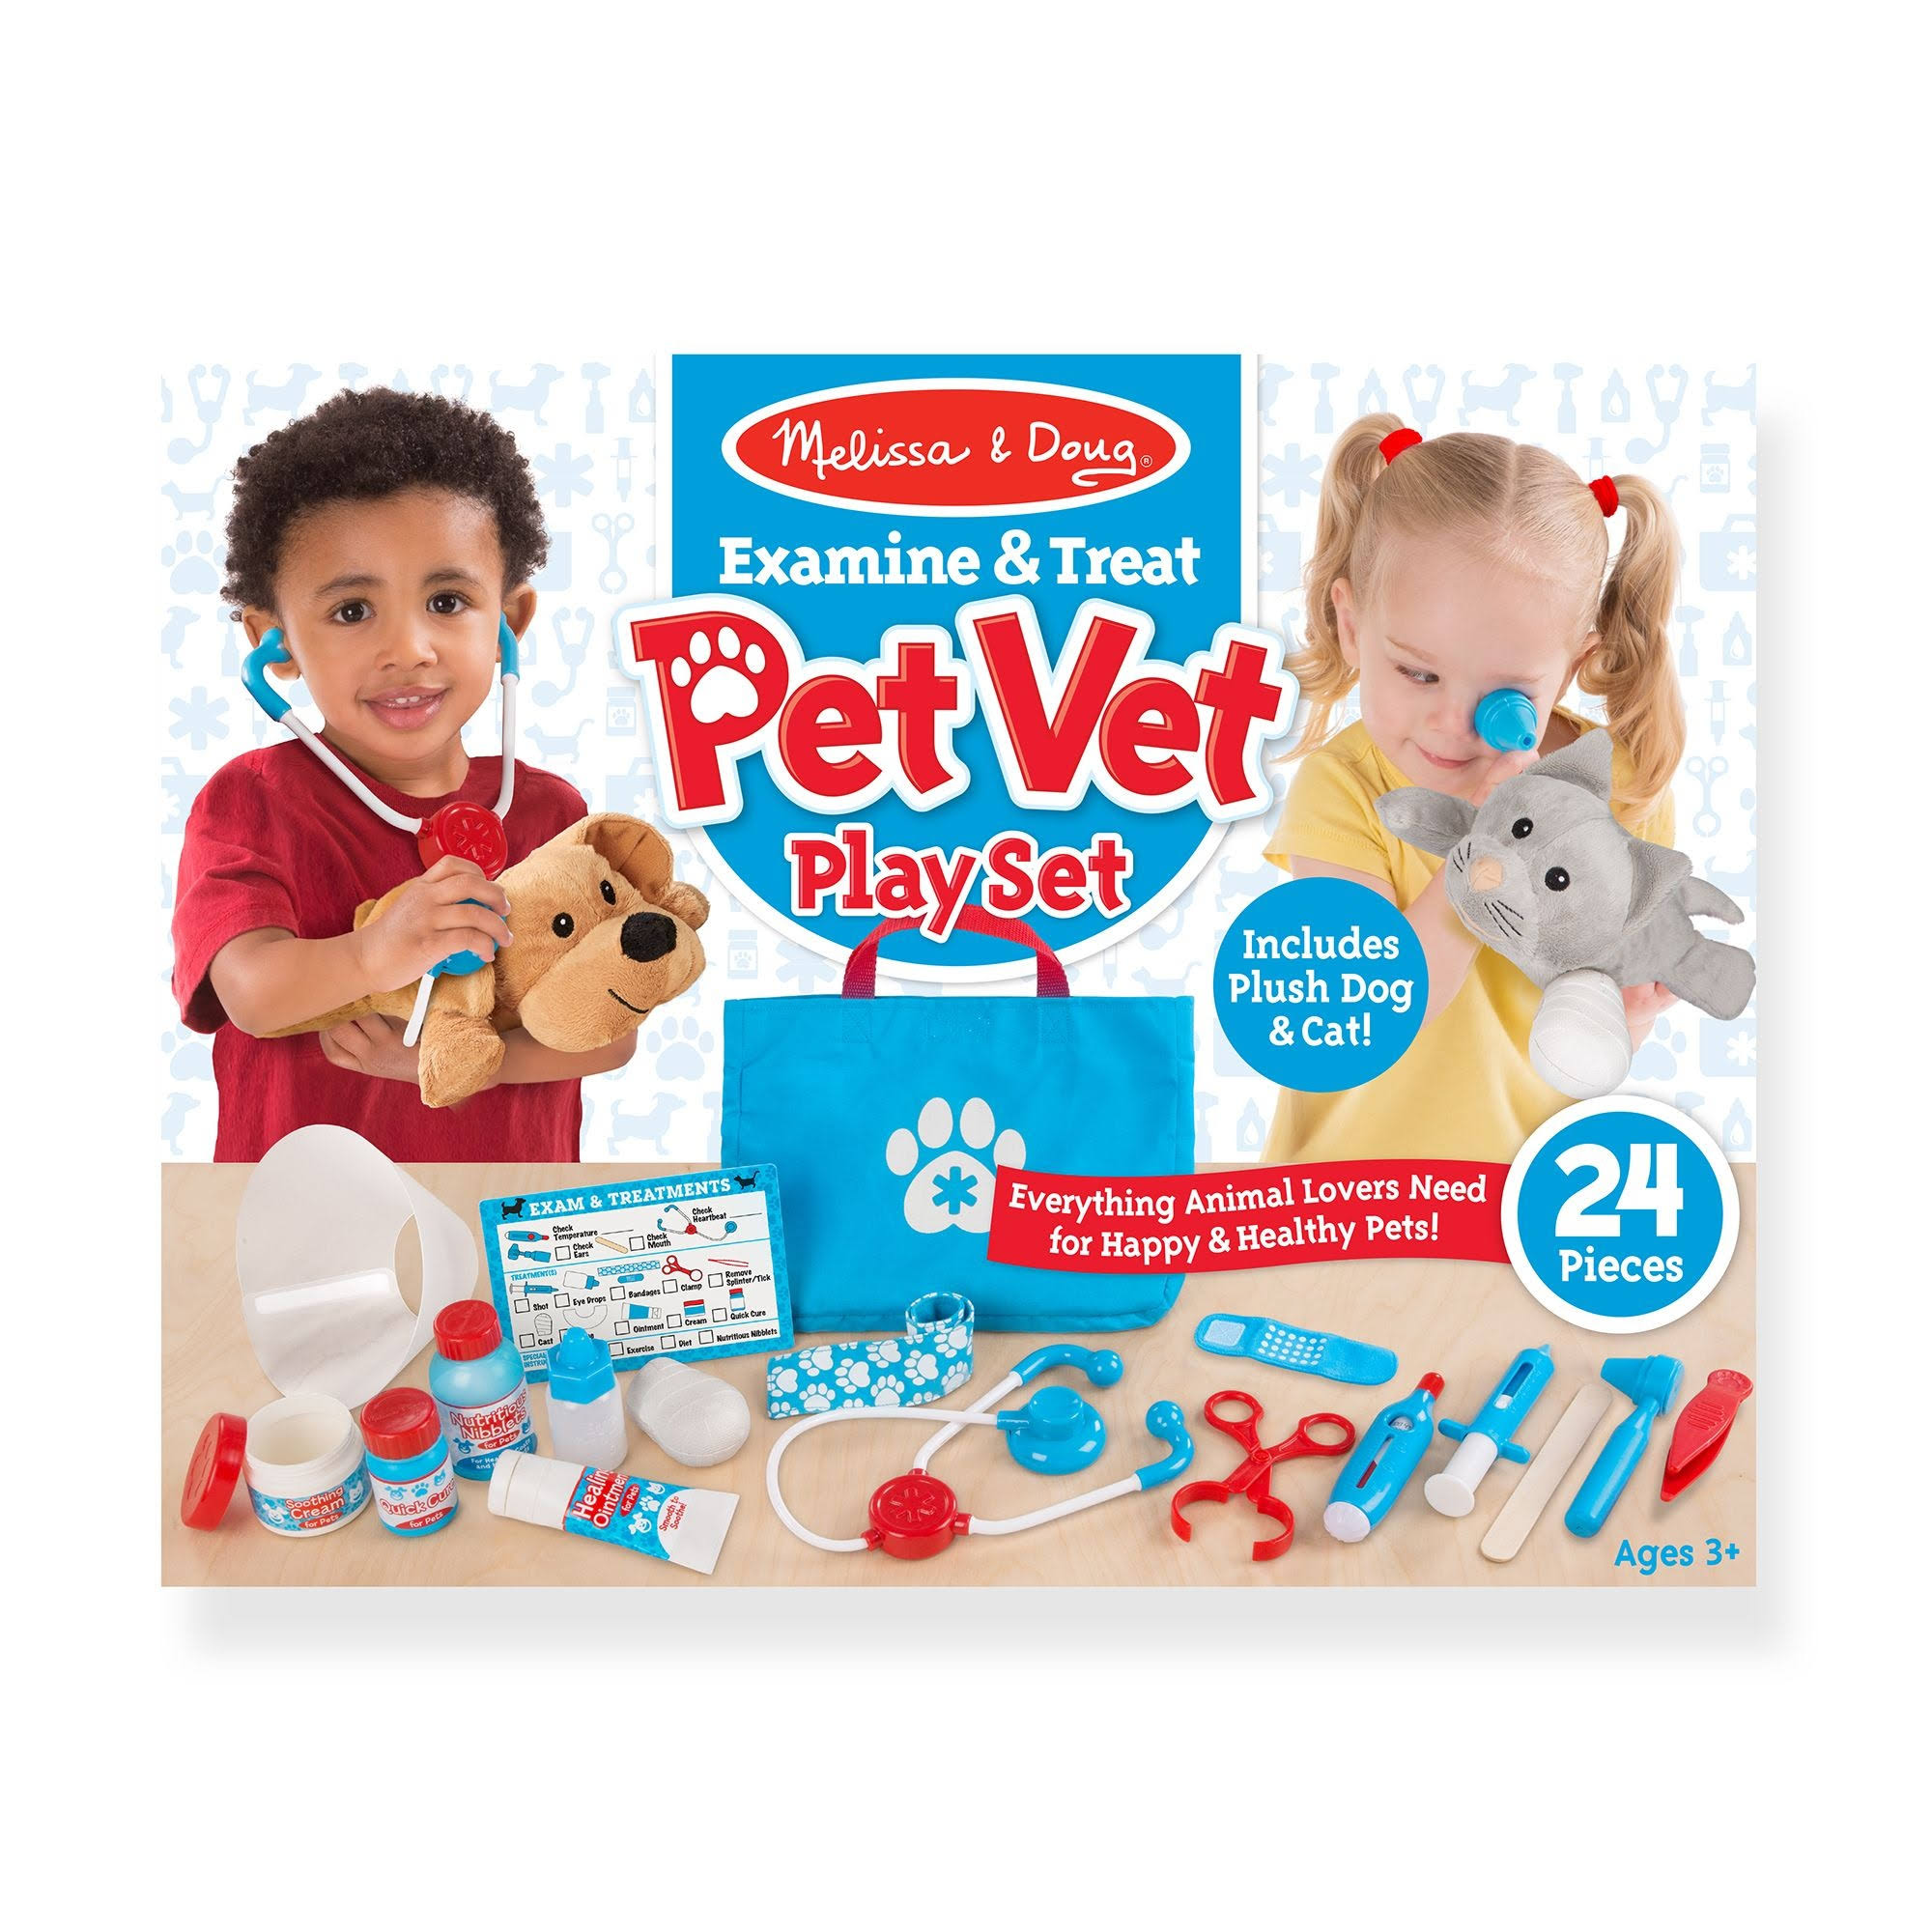 Pretend Play Examine and Treat Pet Vet Play Set - 24pcs